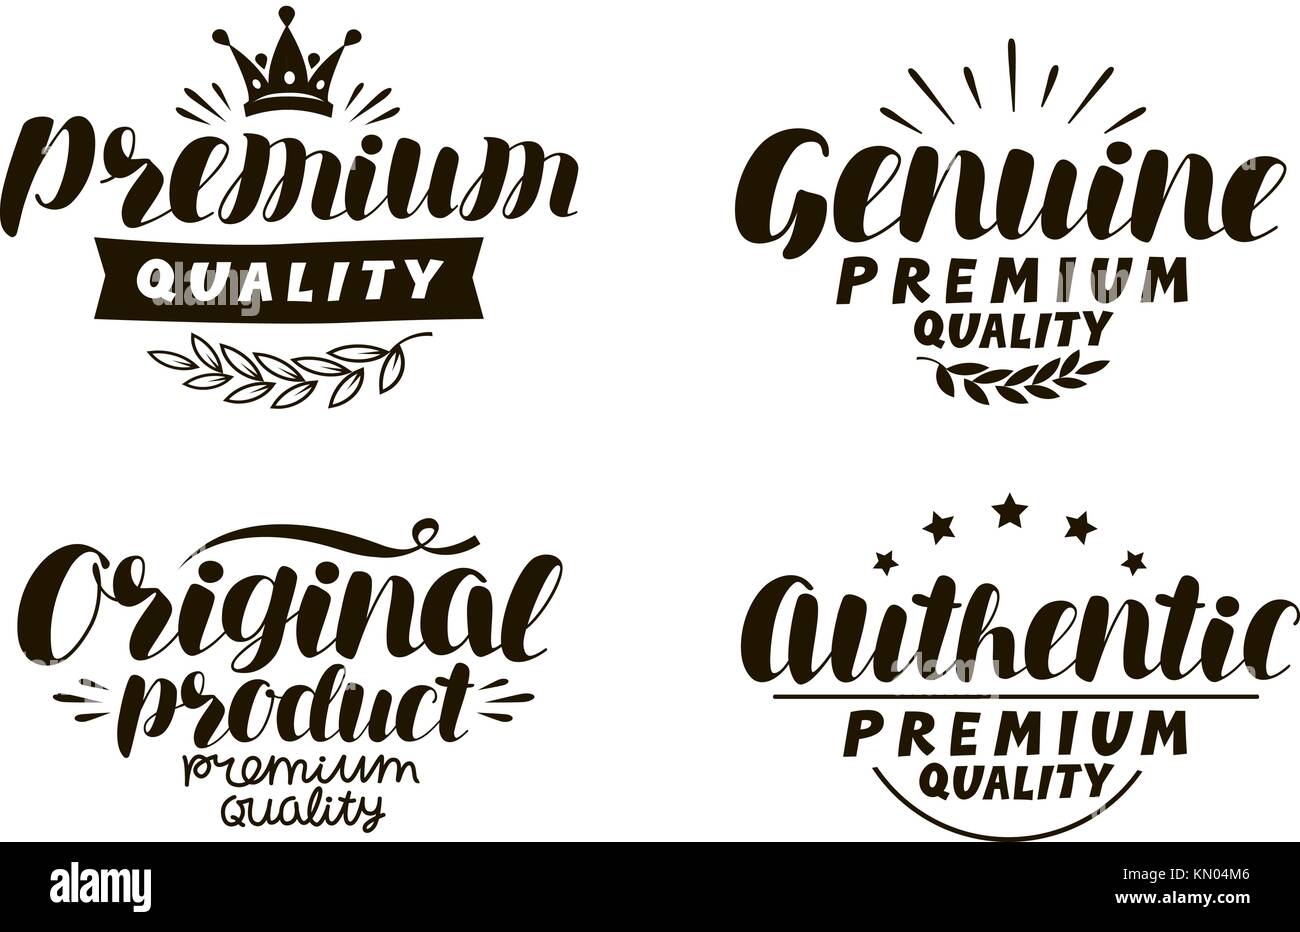 Premium, genuine, original, authentic logo or label. Description of goods, typography concept. Lettering vector illustration Stock Vector